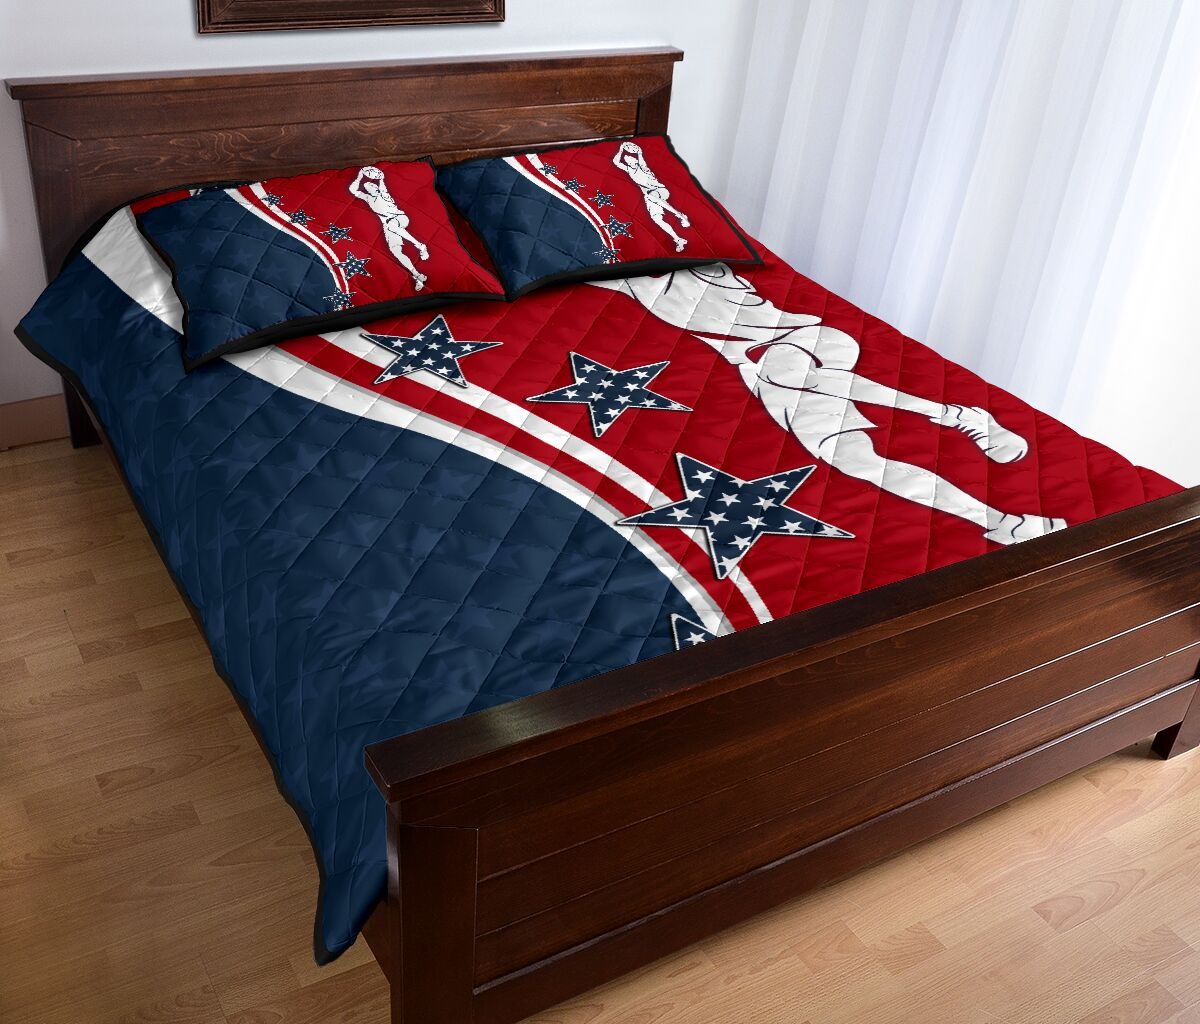 American baseketball quilt bedding set2